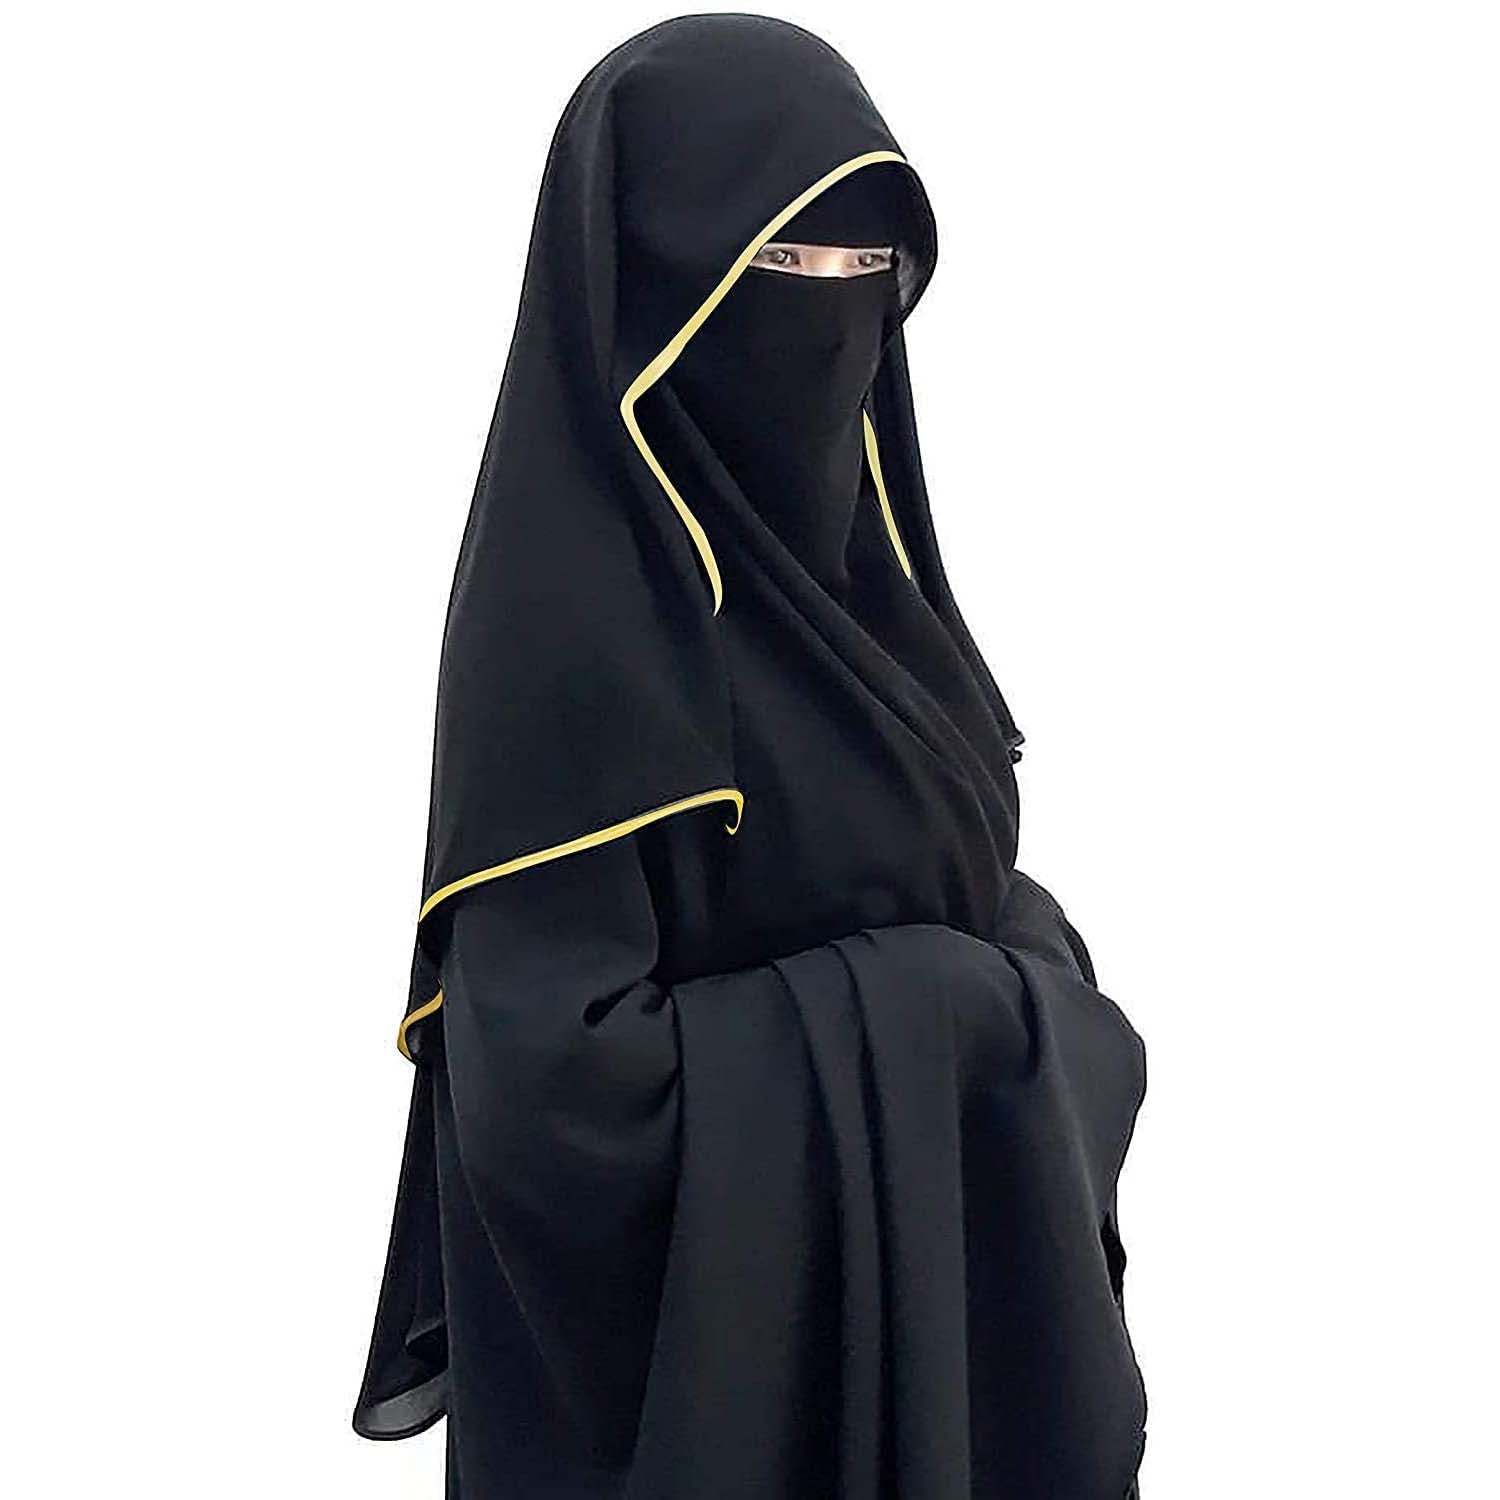 Saudi Chiffon First Class Quality Long Saudi Niqab Burqa Hijab Face Cover Veil Islam Islamic